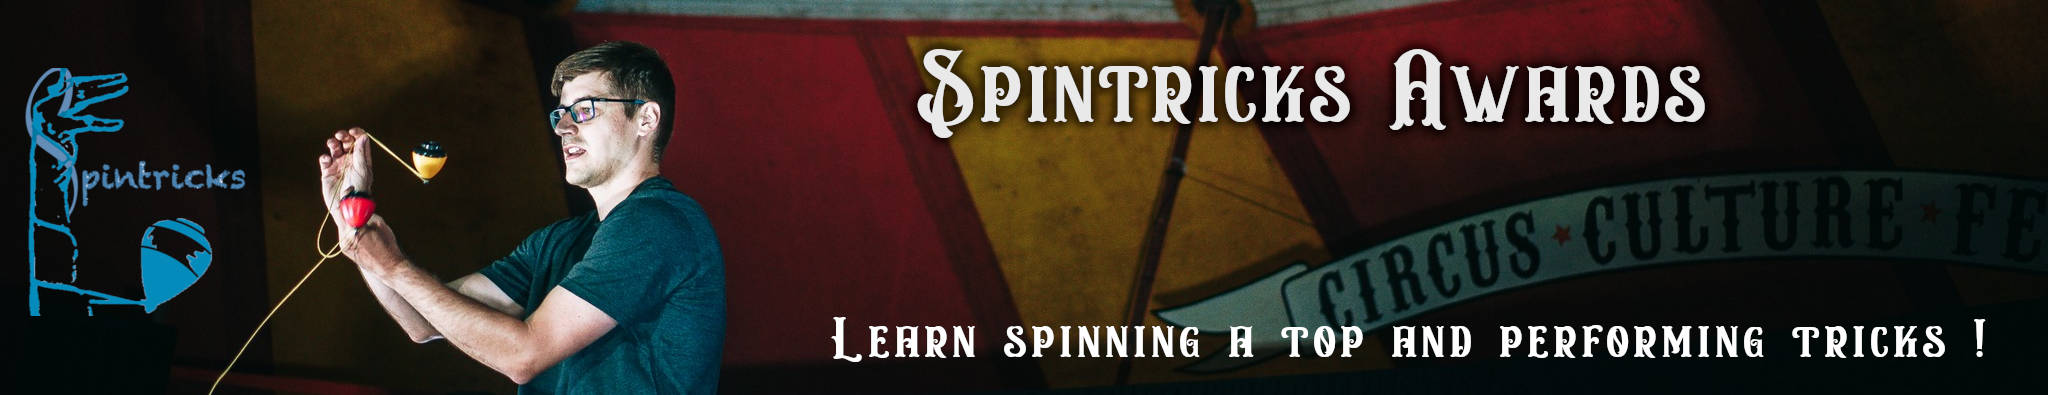 Go deeper into spintops' tricks